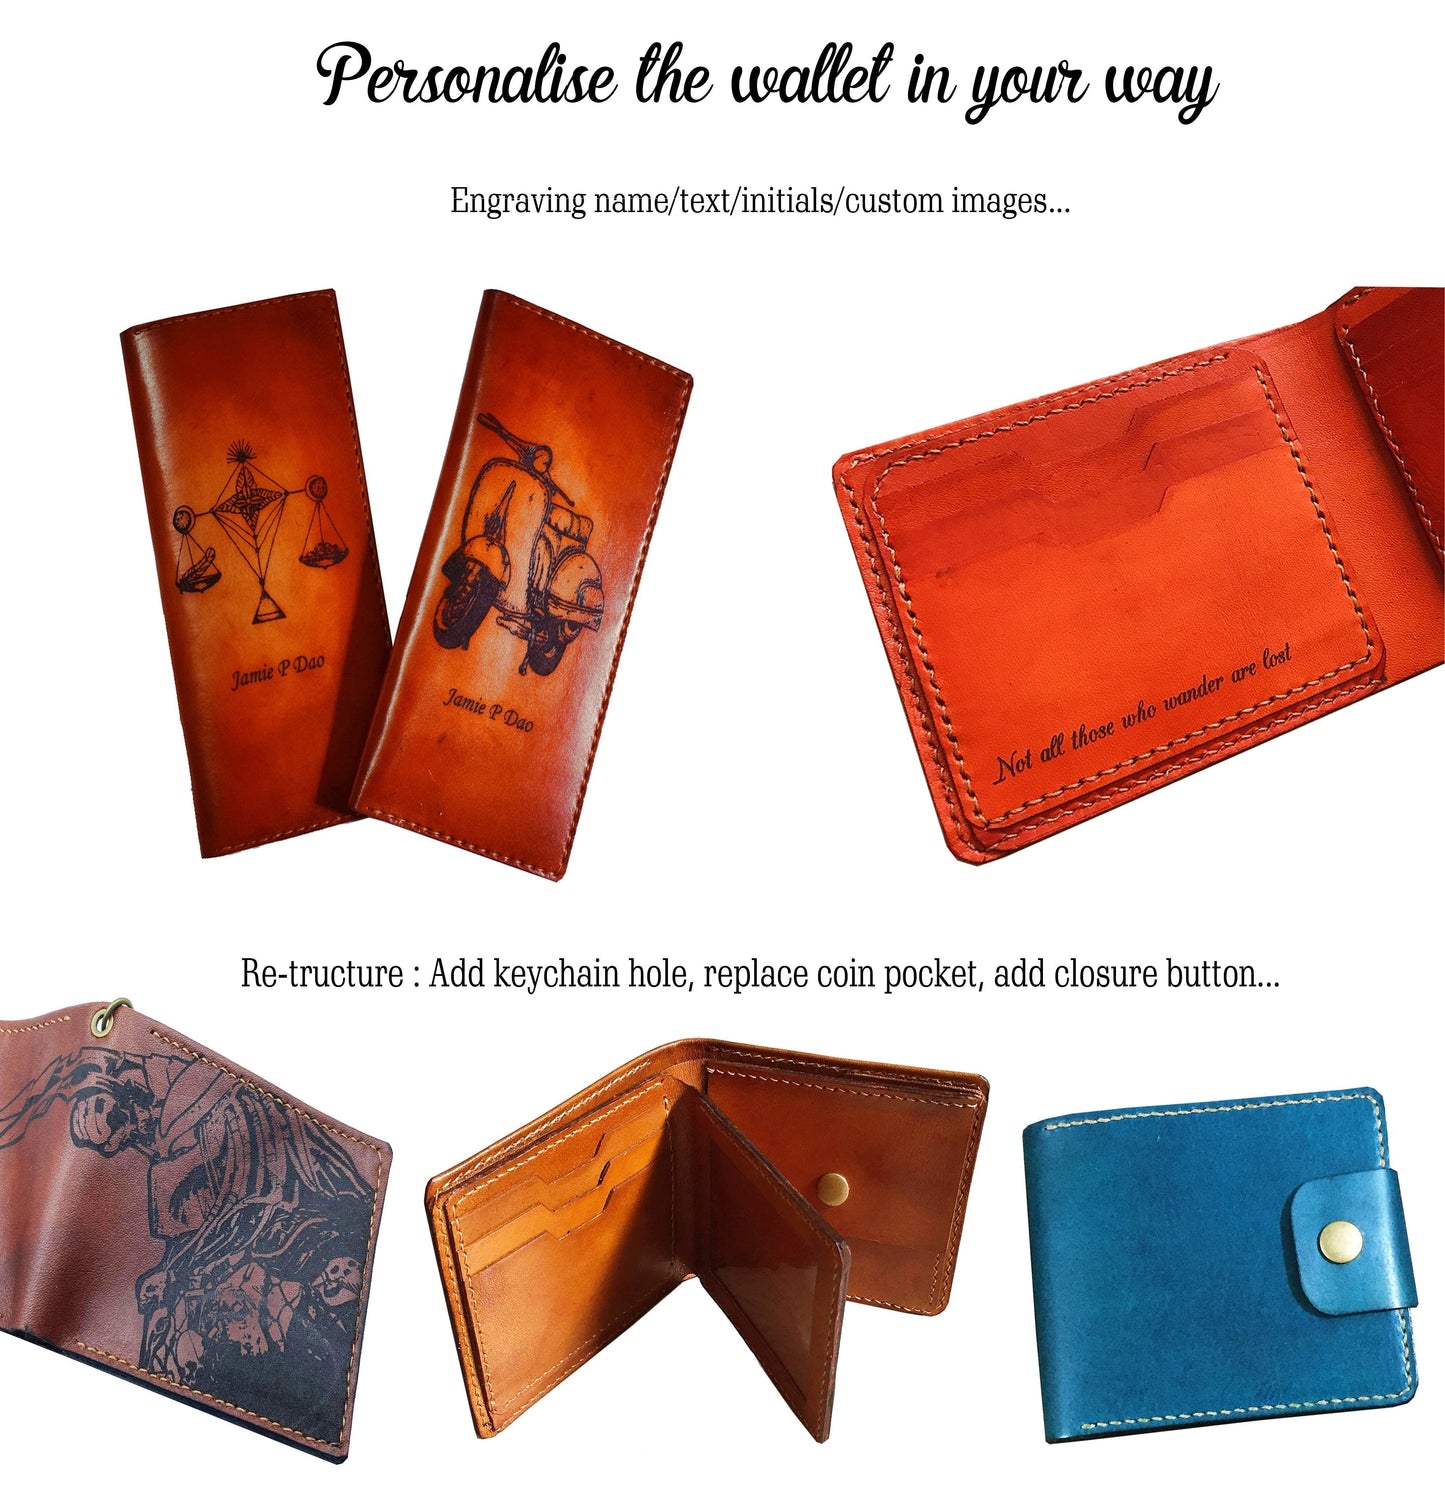 Mayan Corner - Superheroes leather handmade wallet, customized men's wallet, Leather gift ideas for men - Sanctum sanctorum logo